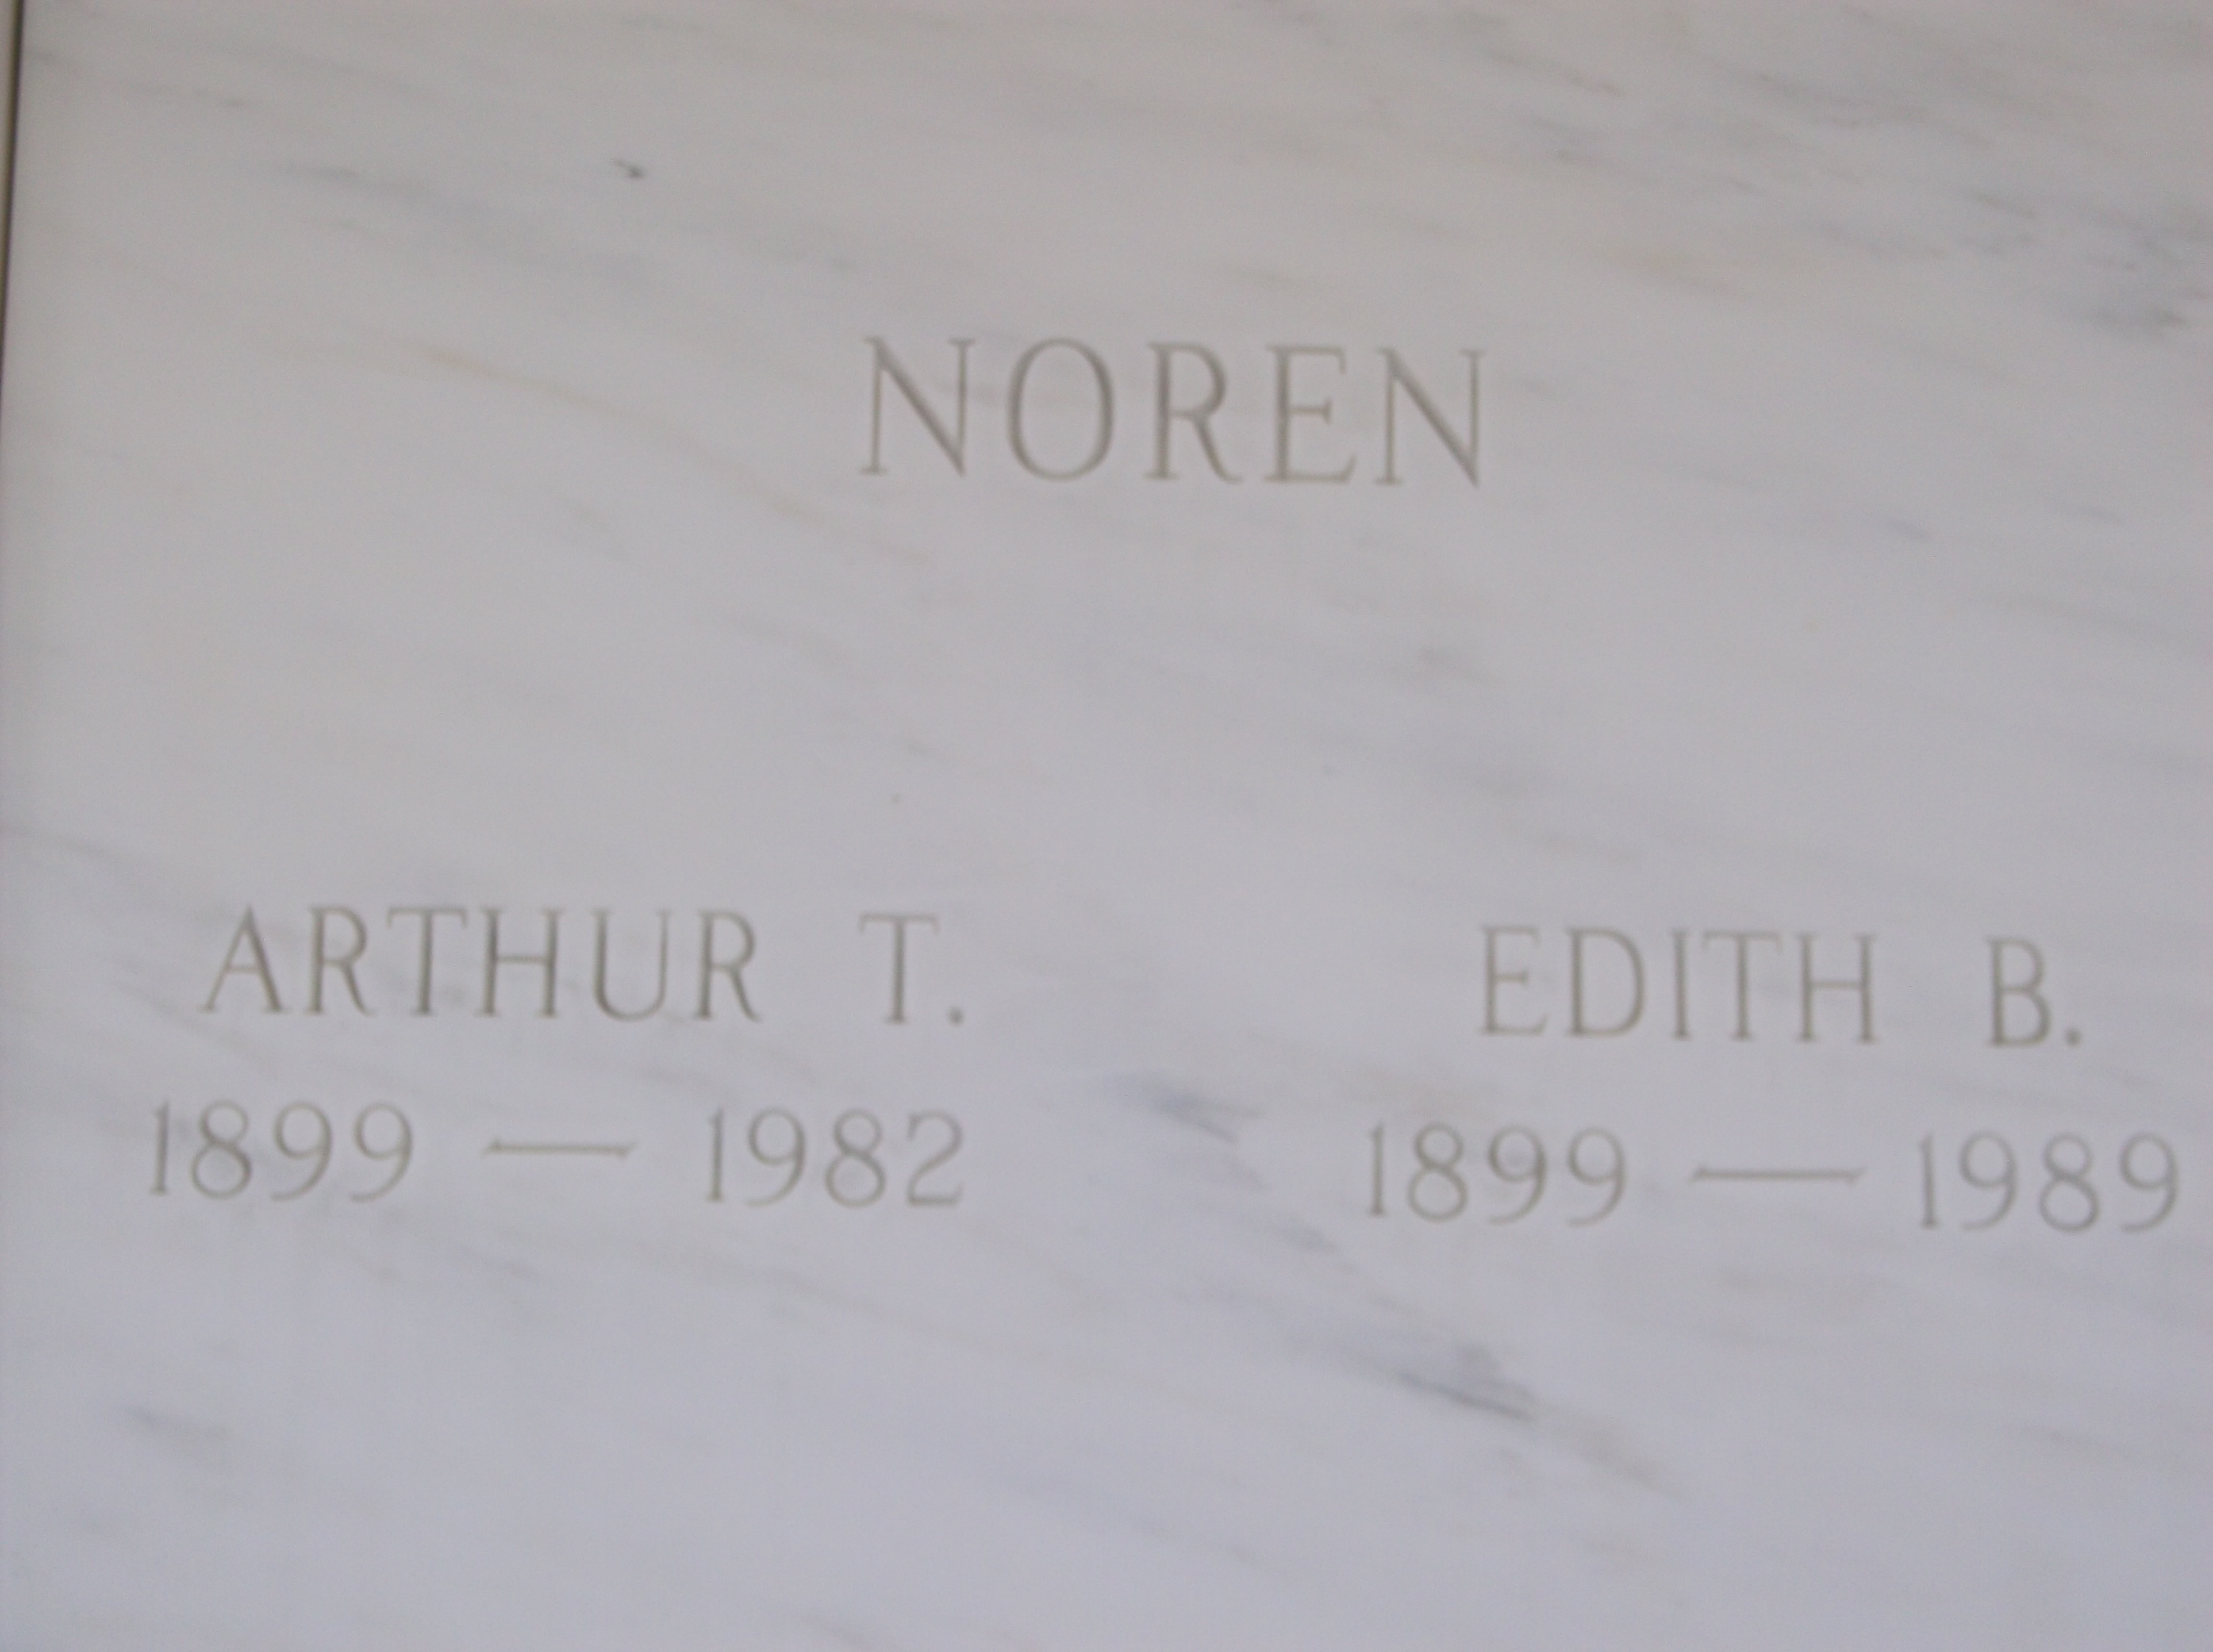 Arthur T Noren